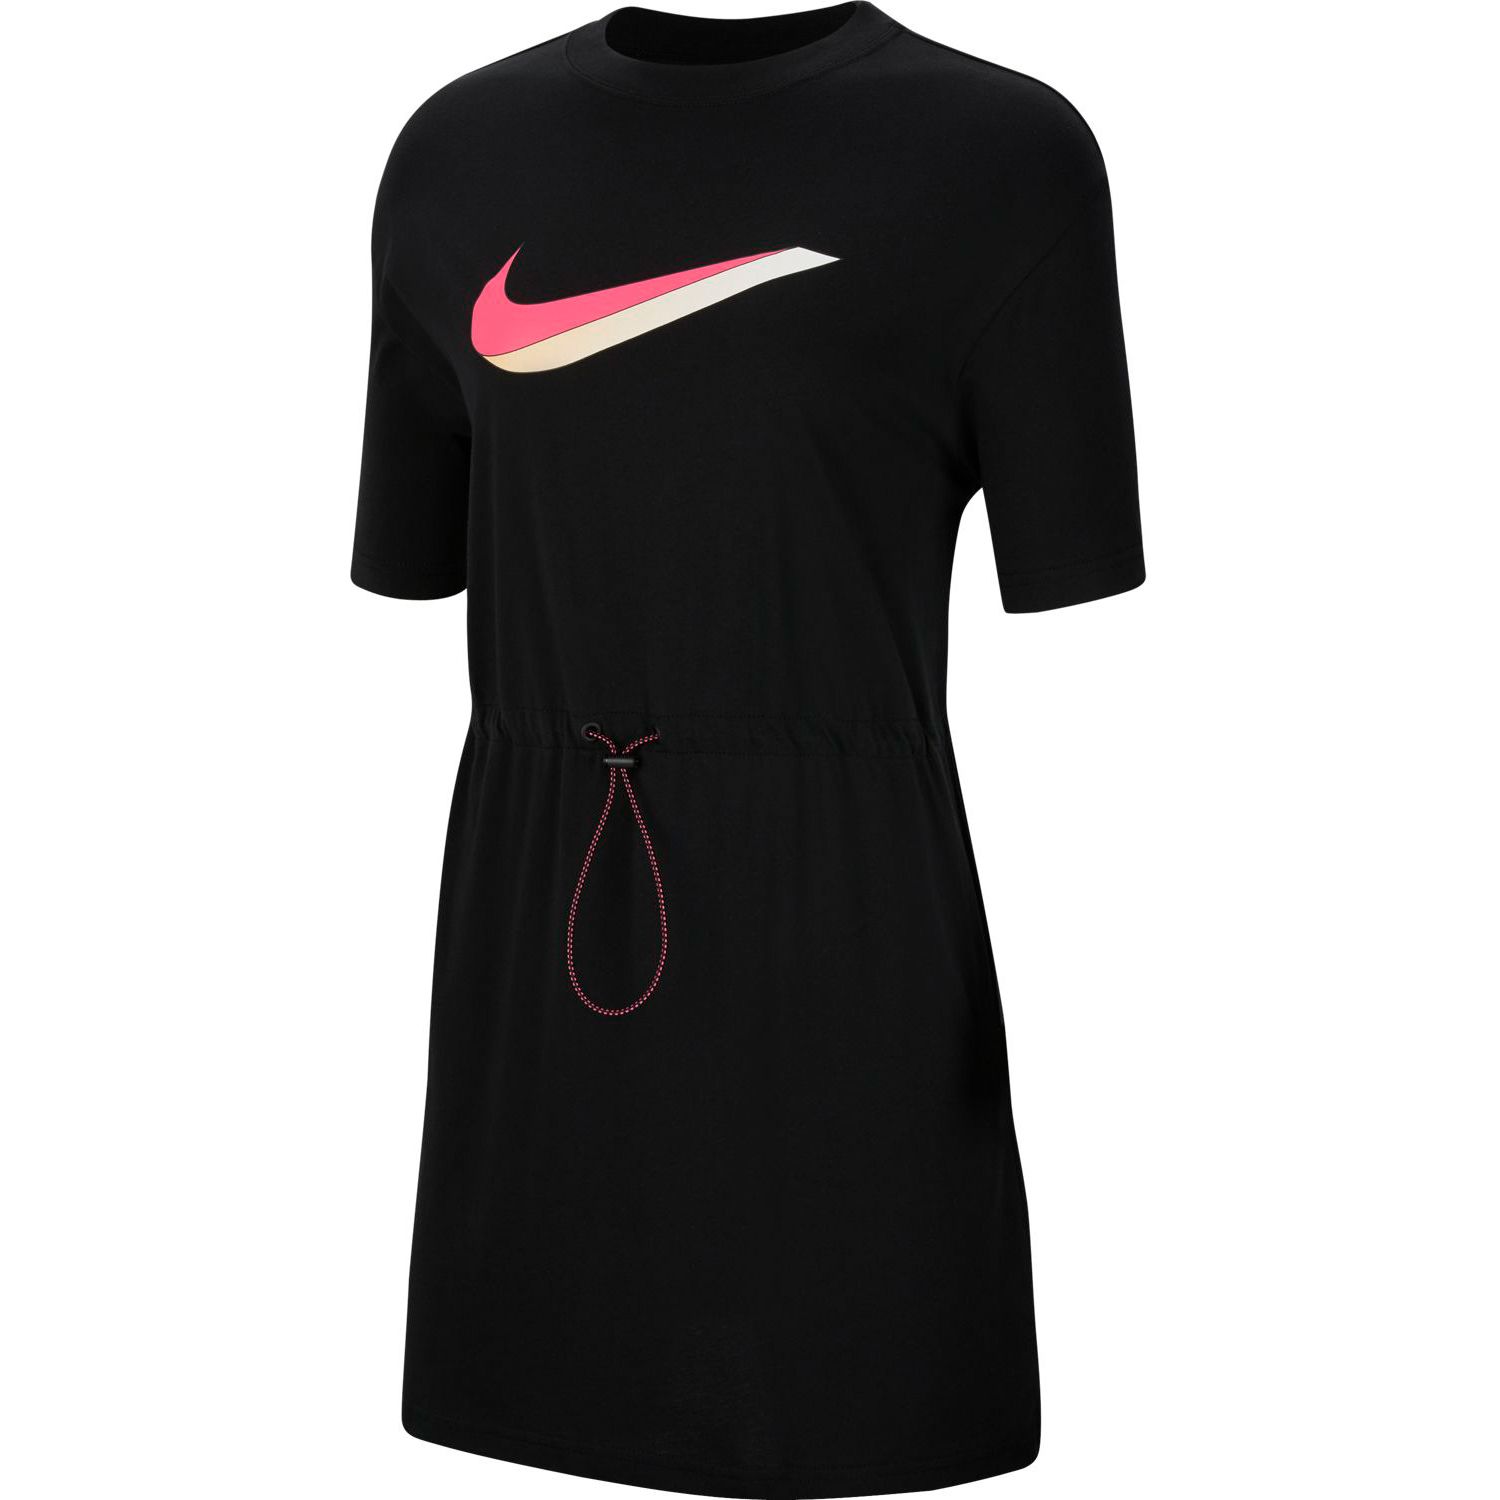 Plus Size Nike Sportswear T-Shirt Dress